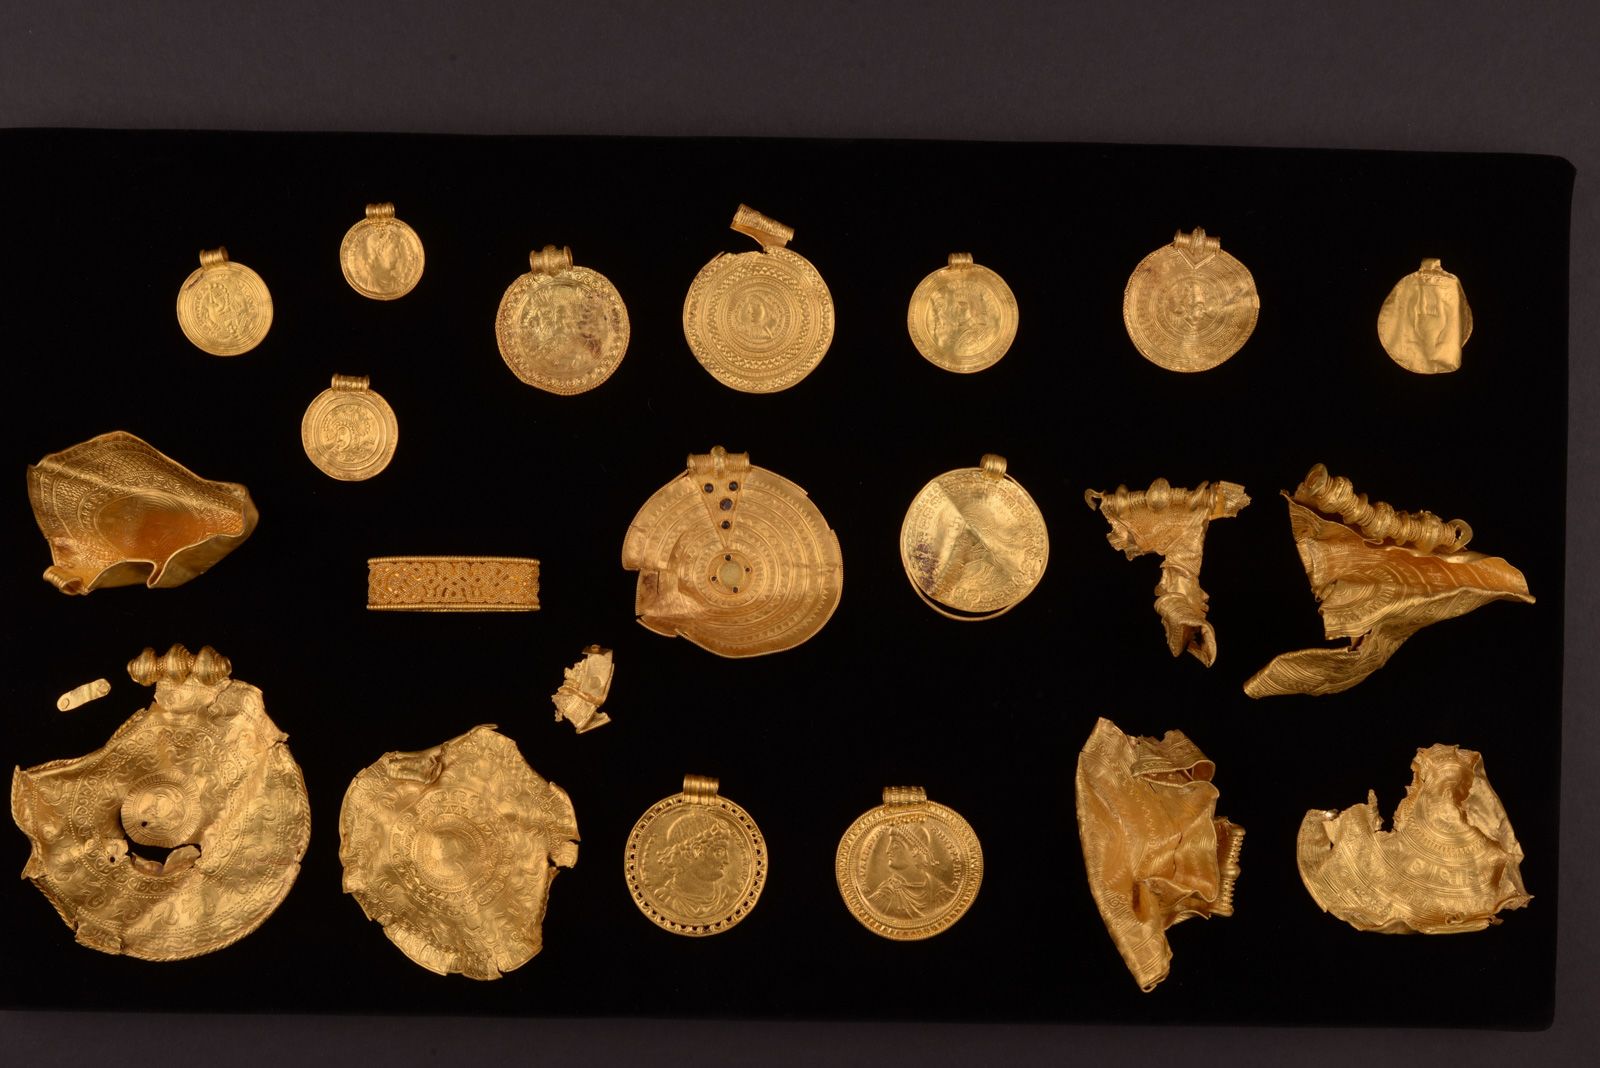 Huge Iron Age gold hoard found by rookie detectorist in Denmark | CNN